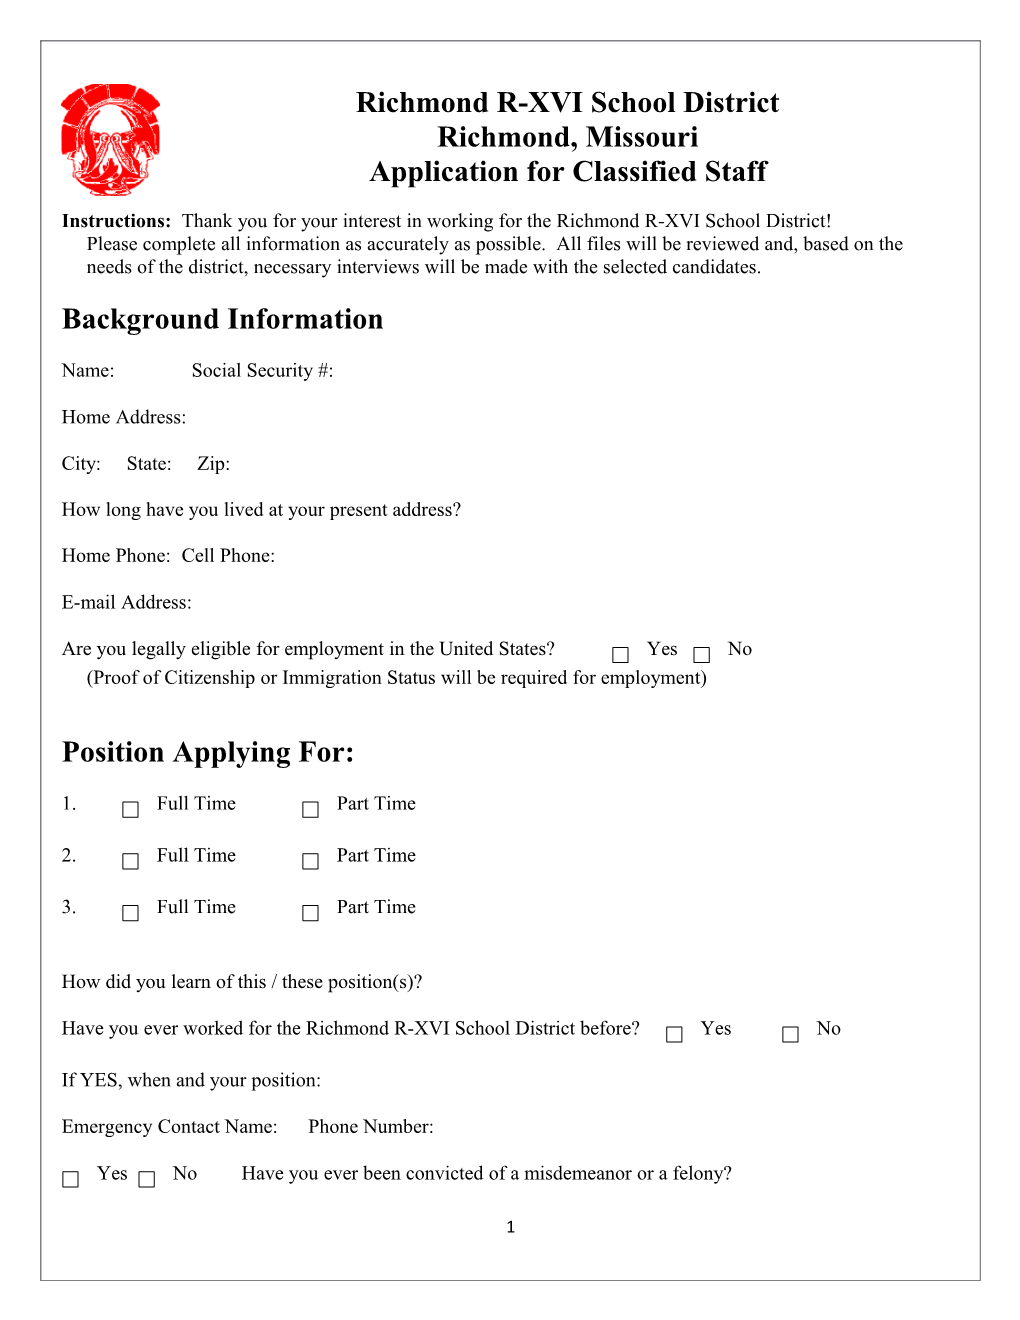 Richmond, Missouri Application for Classified Staff